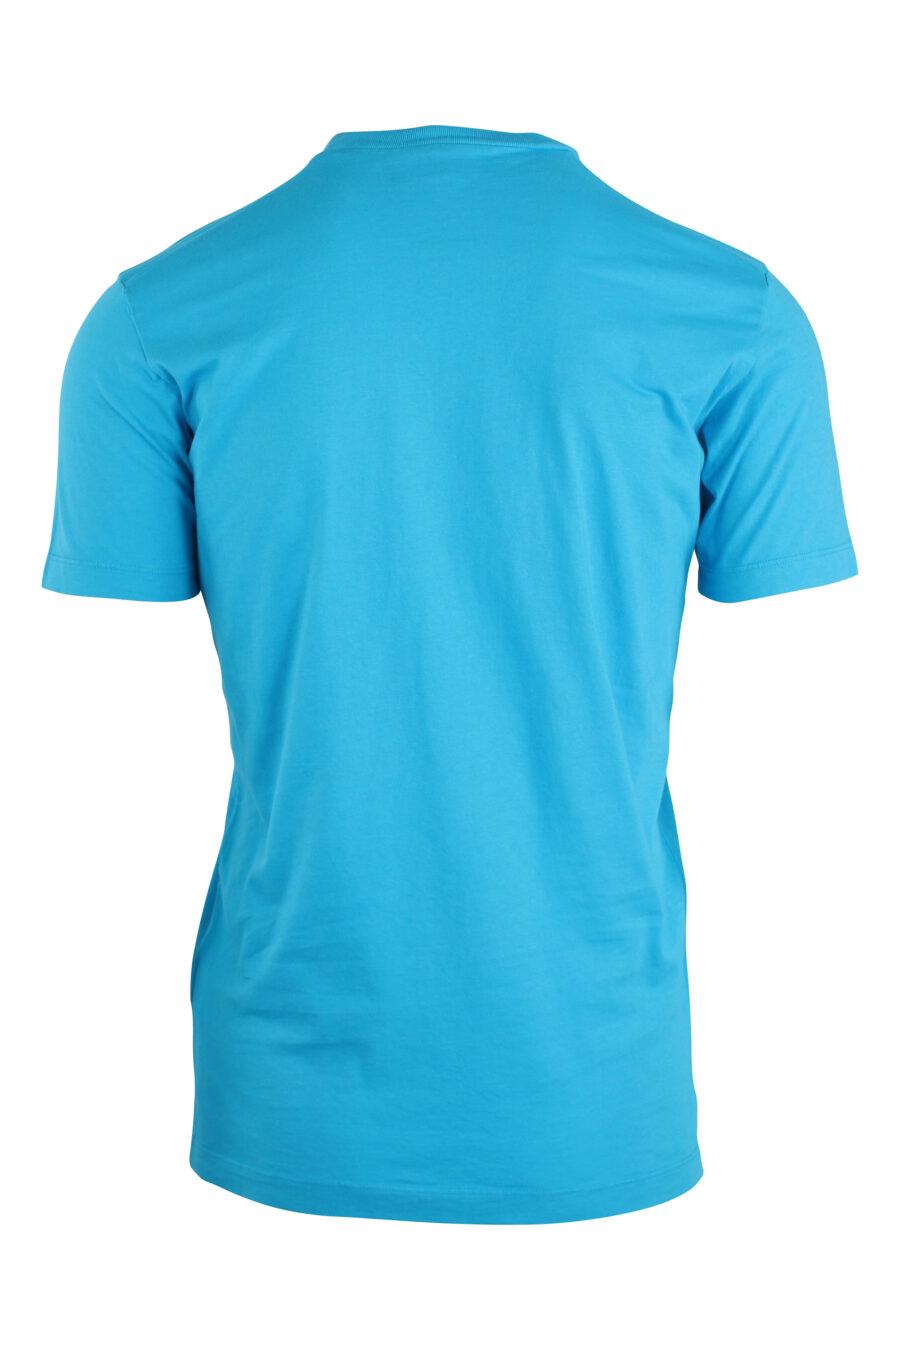 Camiseta azul claro con maxilogo amarillo - IMG 8922